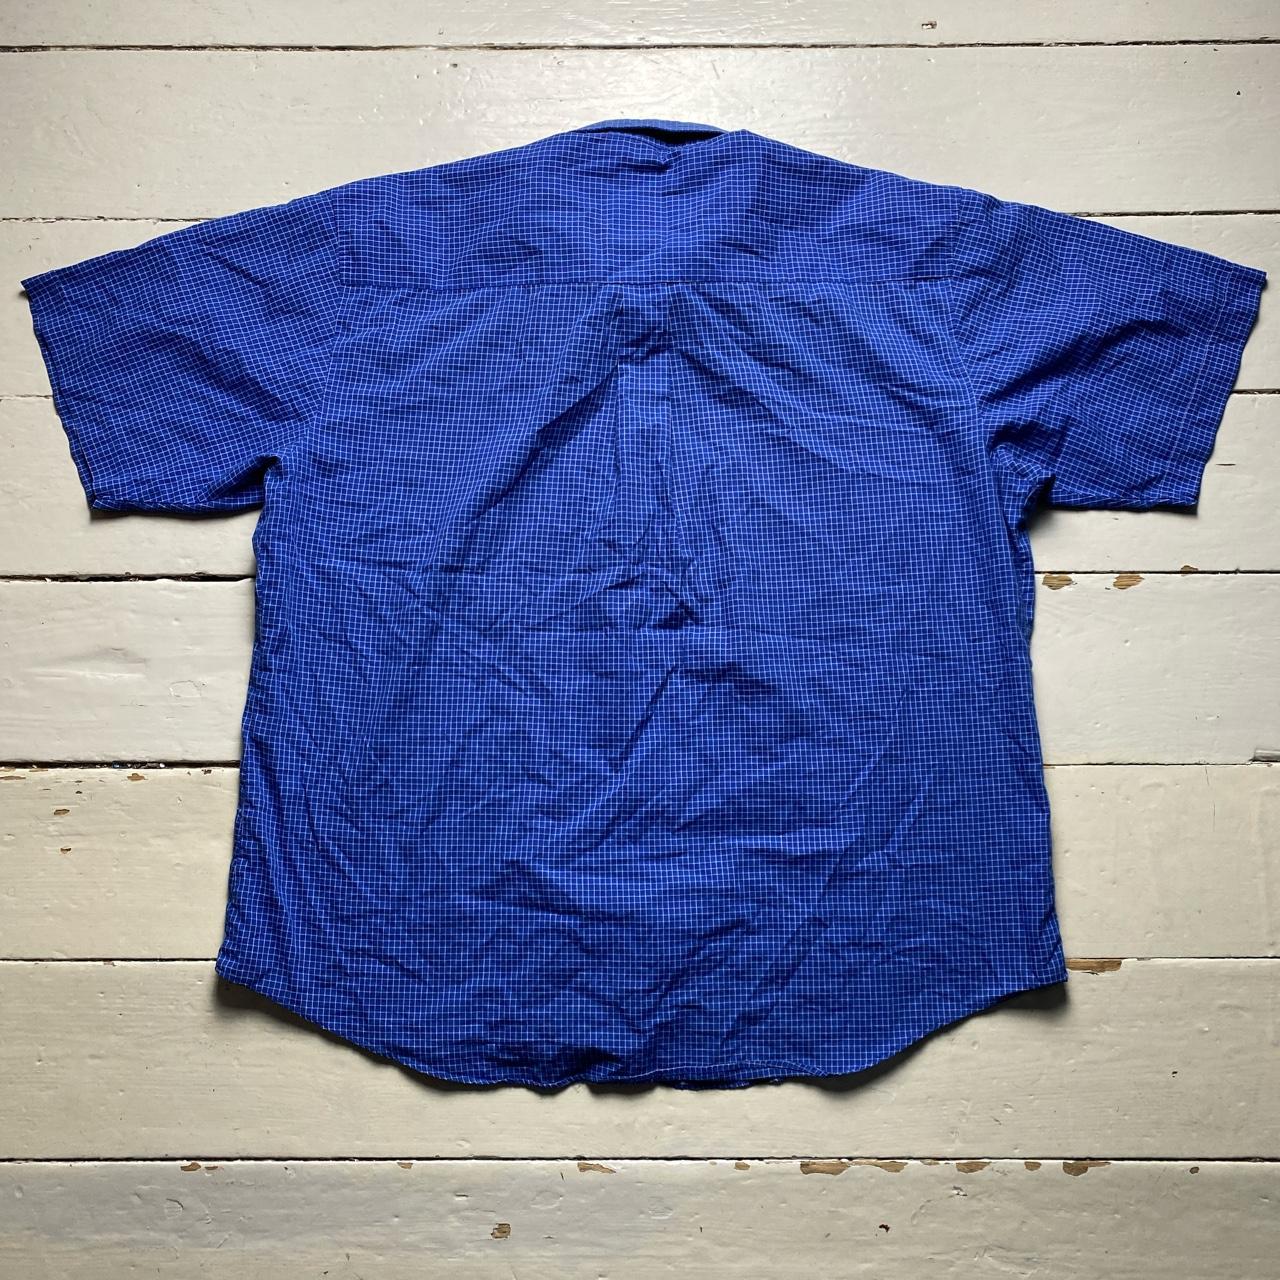 London Underground Vintage 90’s Blue and White Grid Short Sleeve Shirt